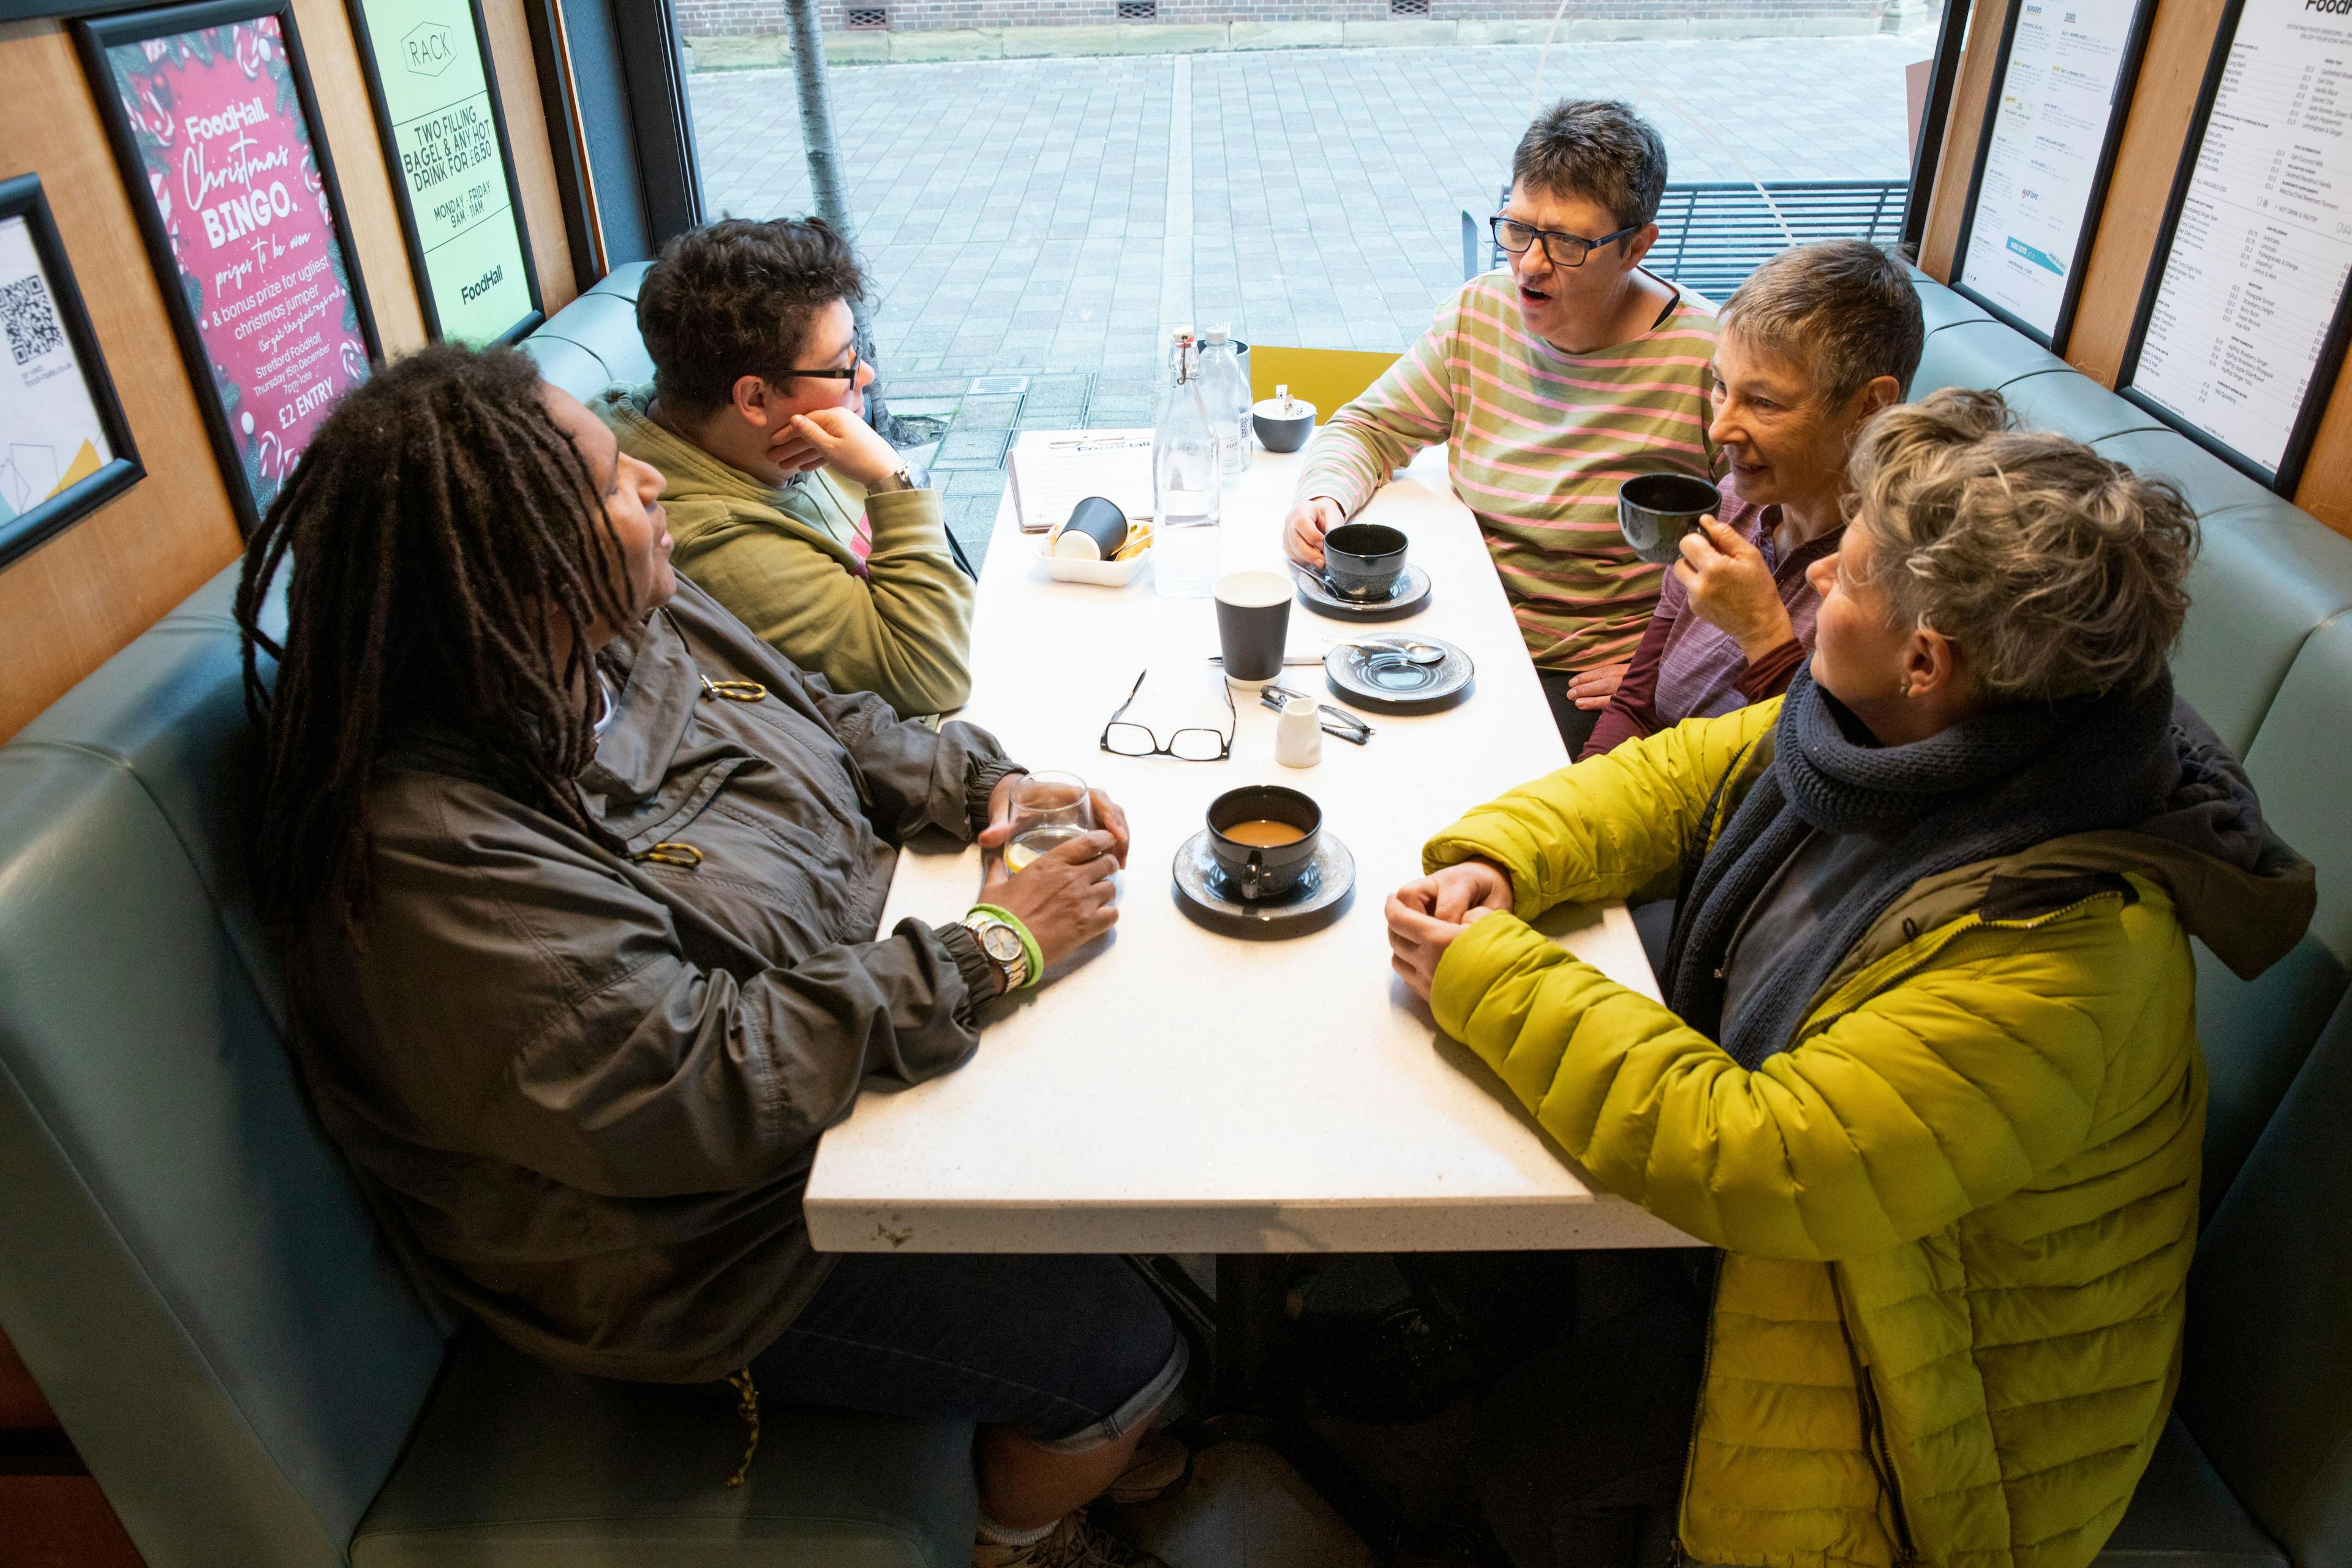 Women socialising in a café